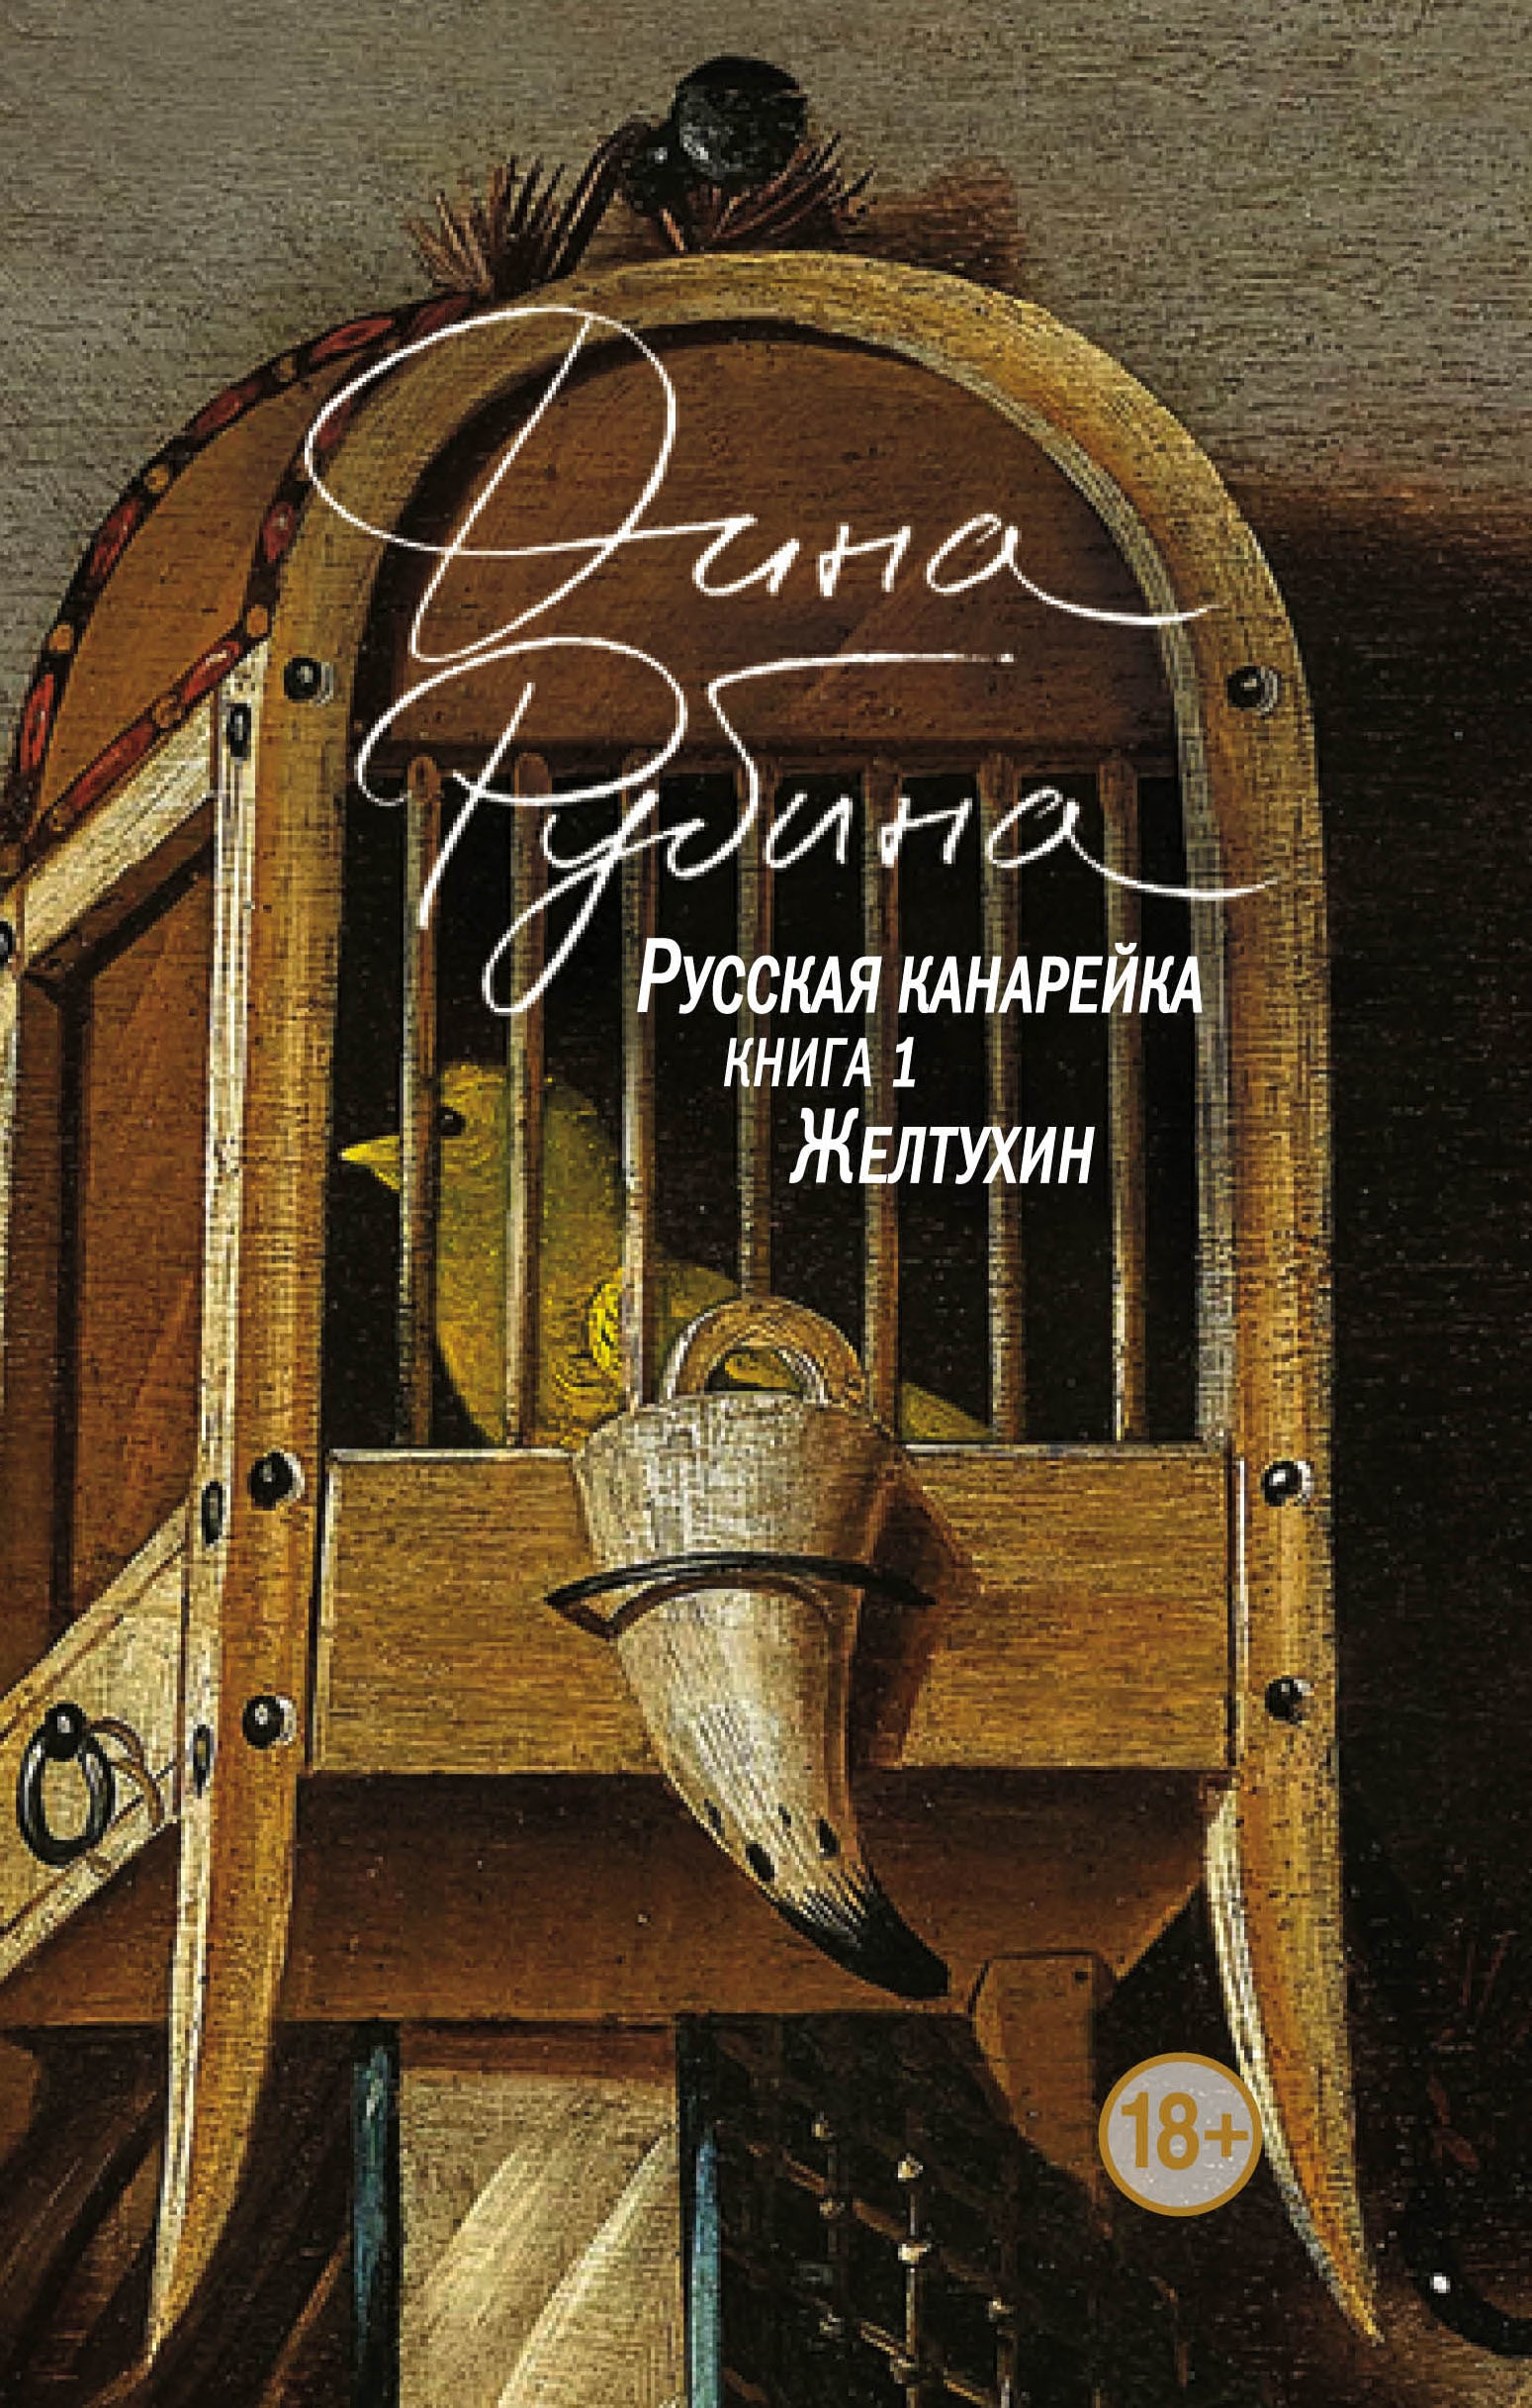 Book “Русская канарейка. Желтухин” by Дина Рубина — May 24, 2019